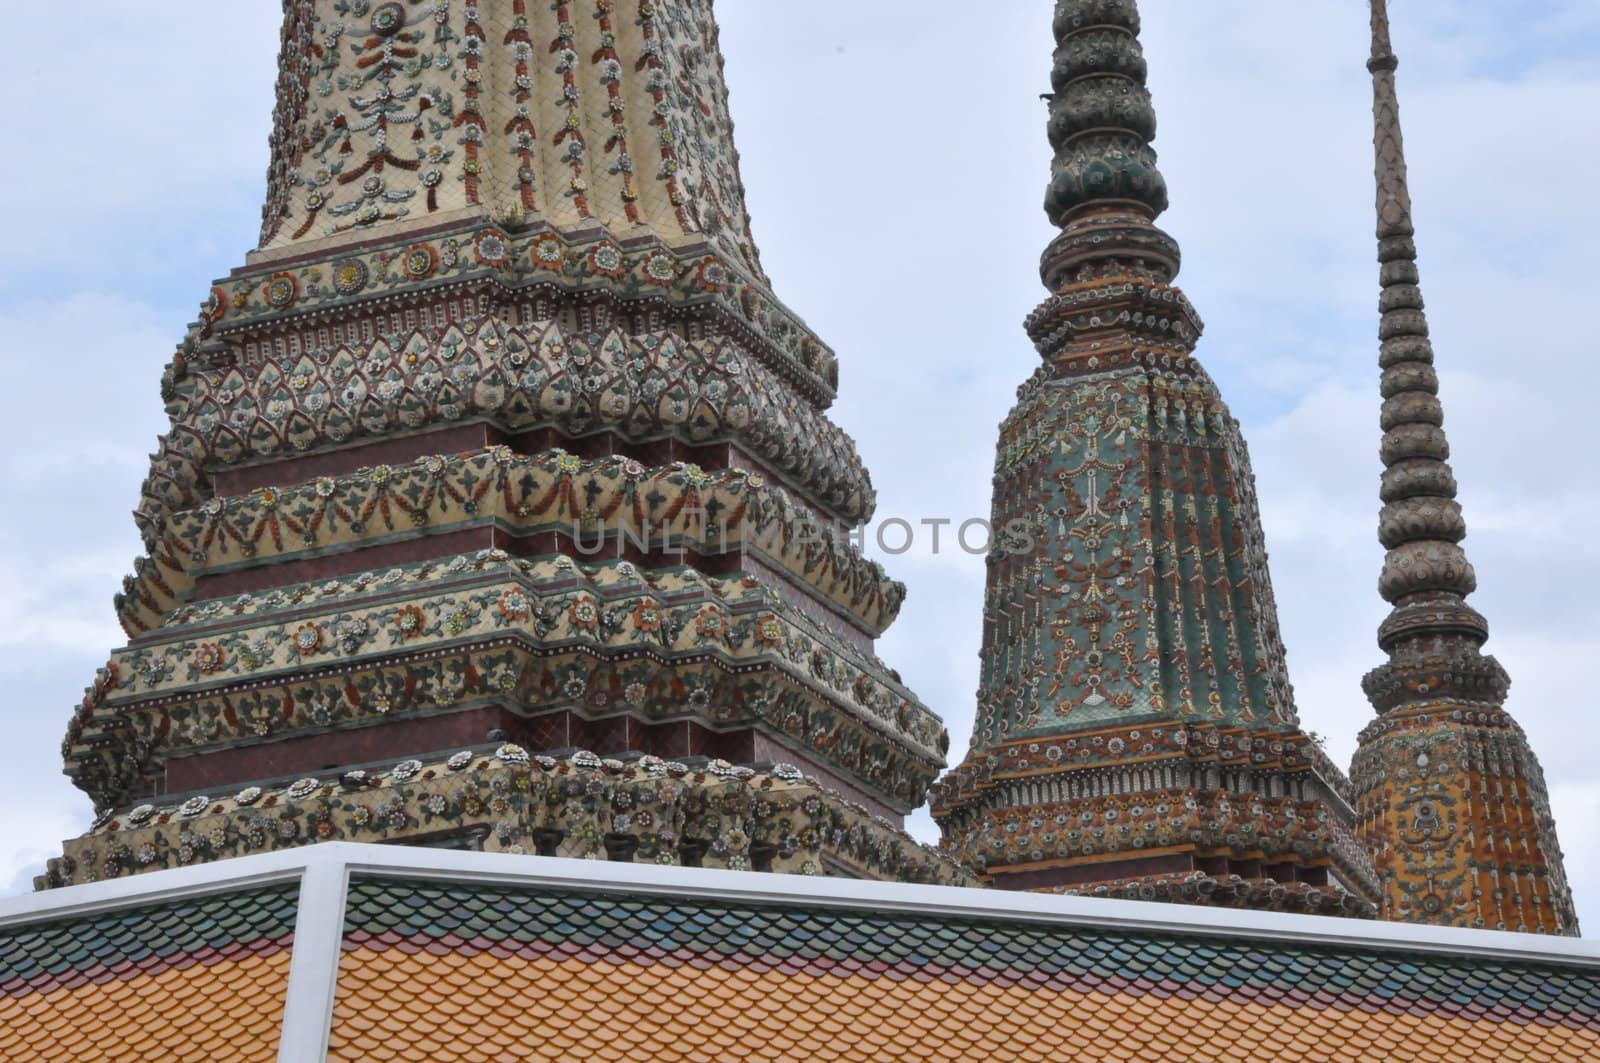 Wat Pho in Bangkok, Thailand by sainaniritu